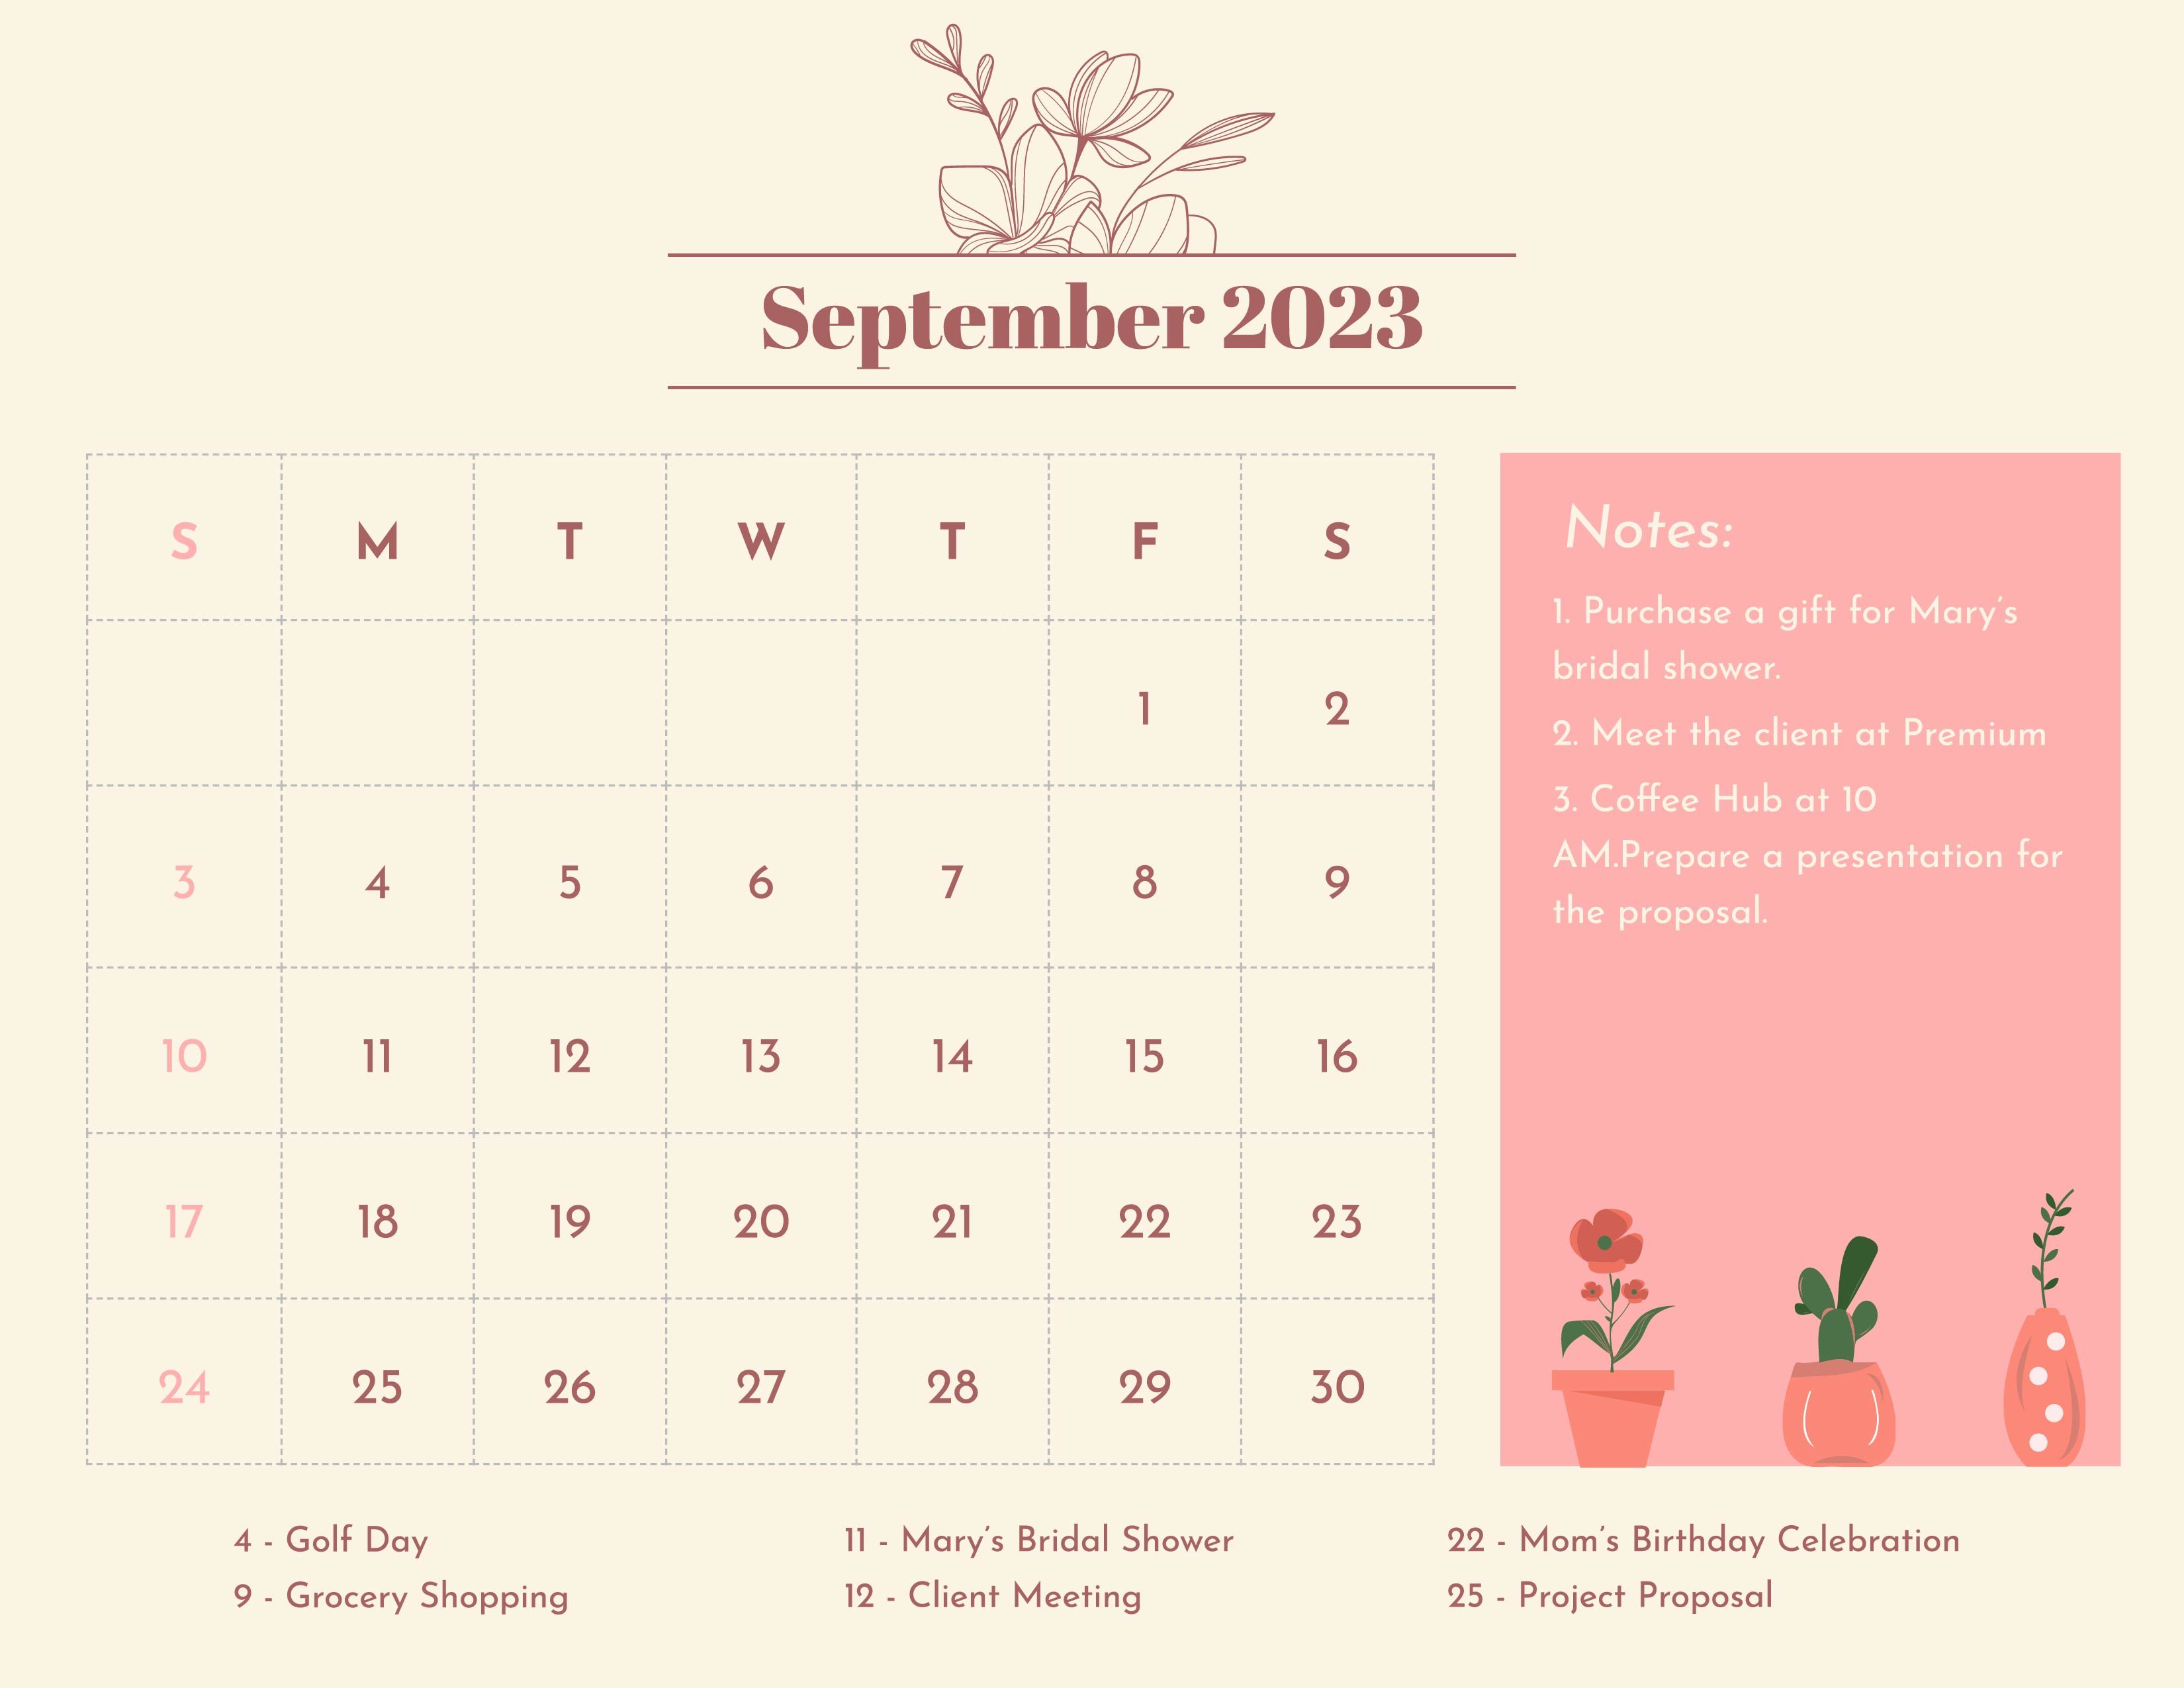 Free September 2023 Calendar Template Download in Word, Google Docs